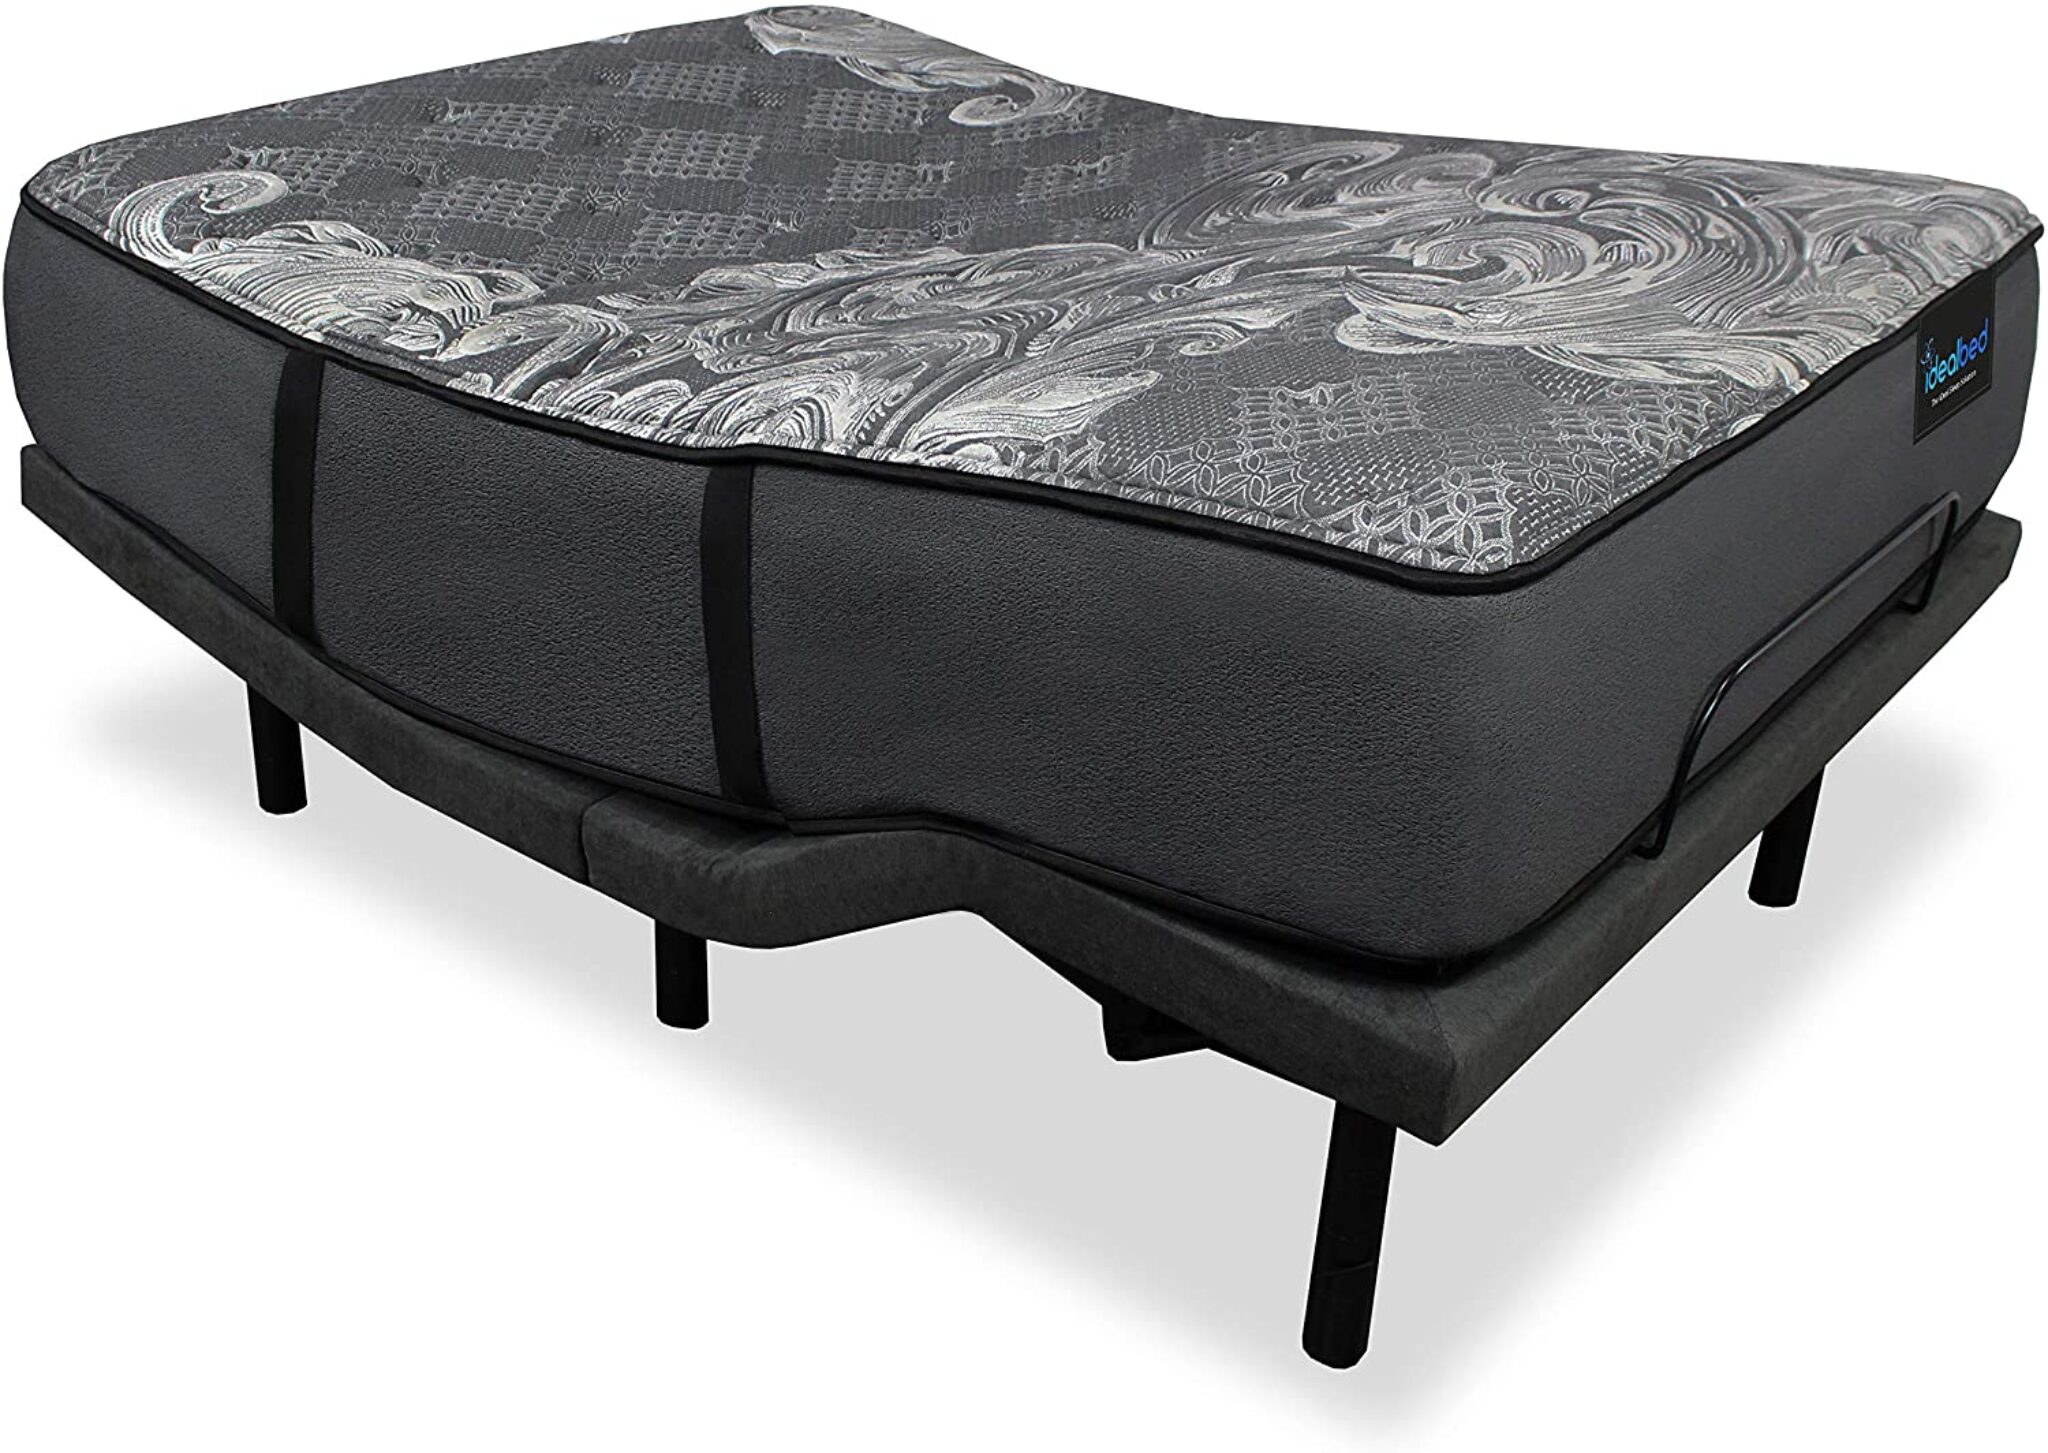 idealbed luxe series hybrid iq5 luxury firm mattress